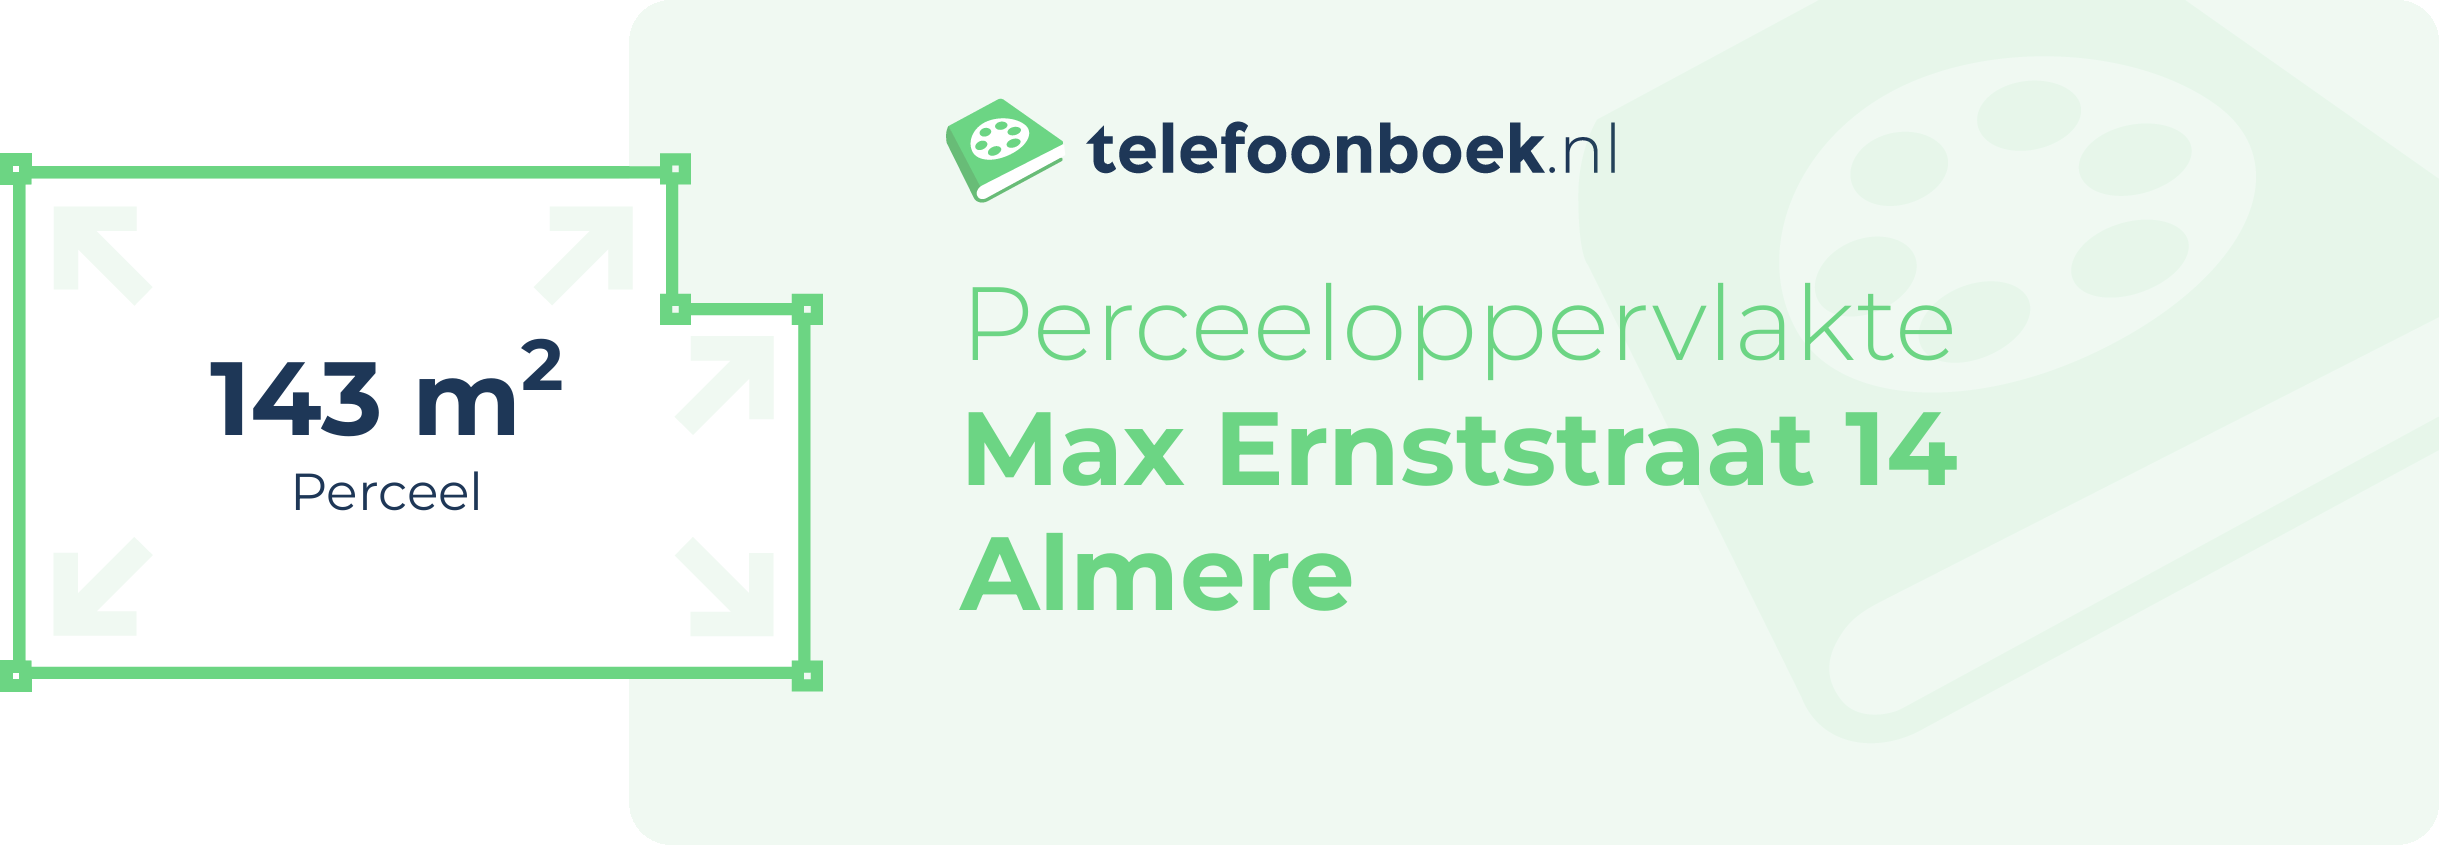 Perceeloppervlakte Max Ernststraat 14 Almere